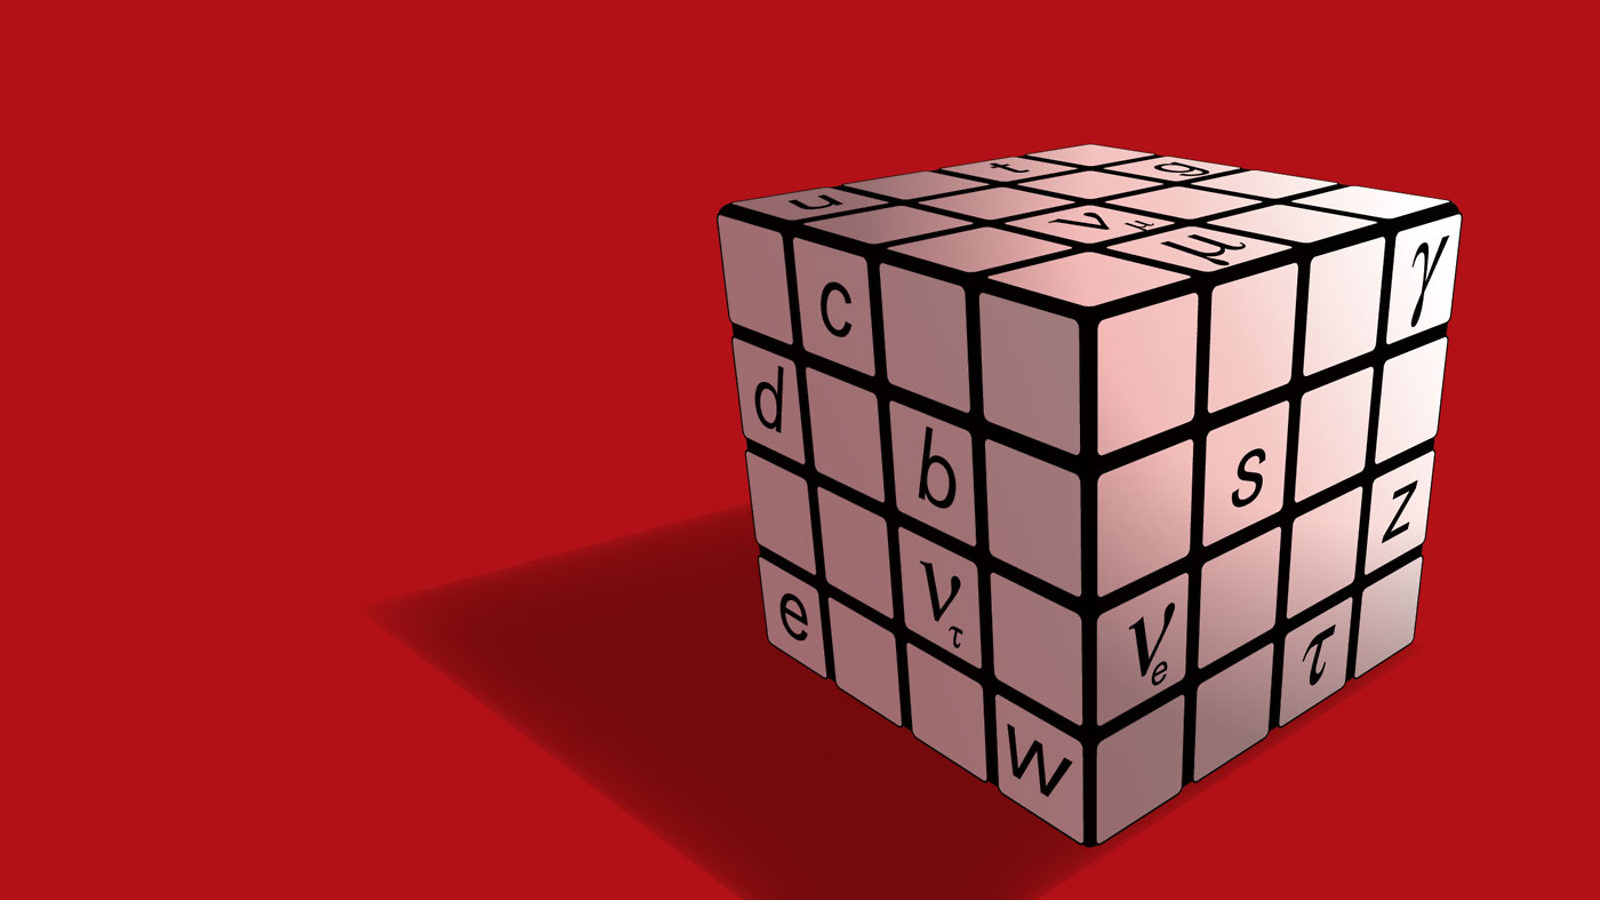 Illustration of Standard Model Cube